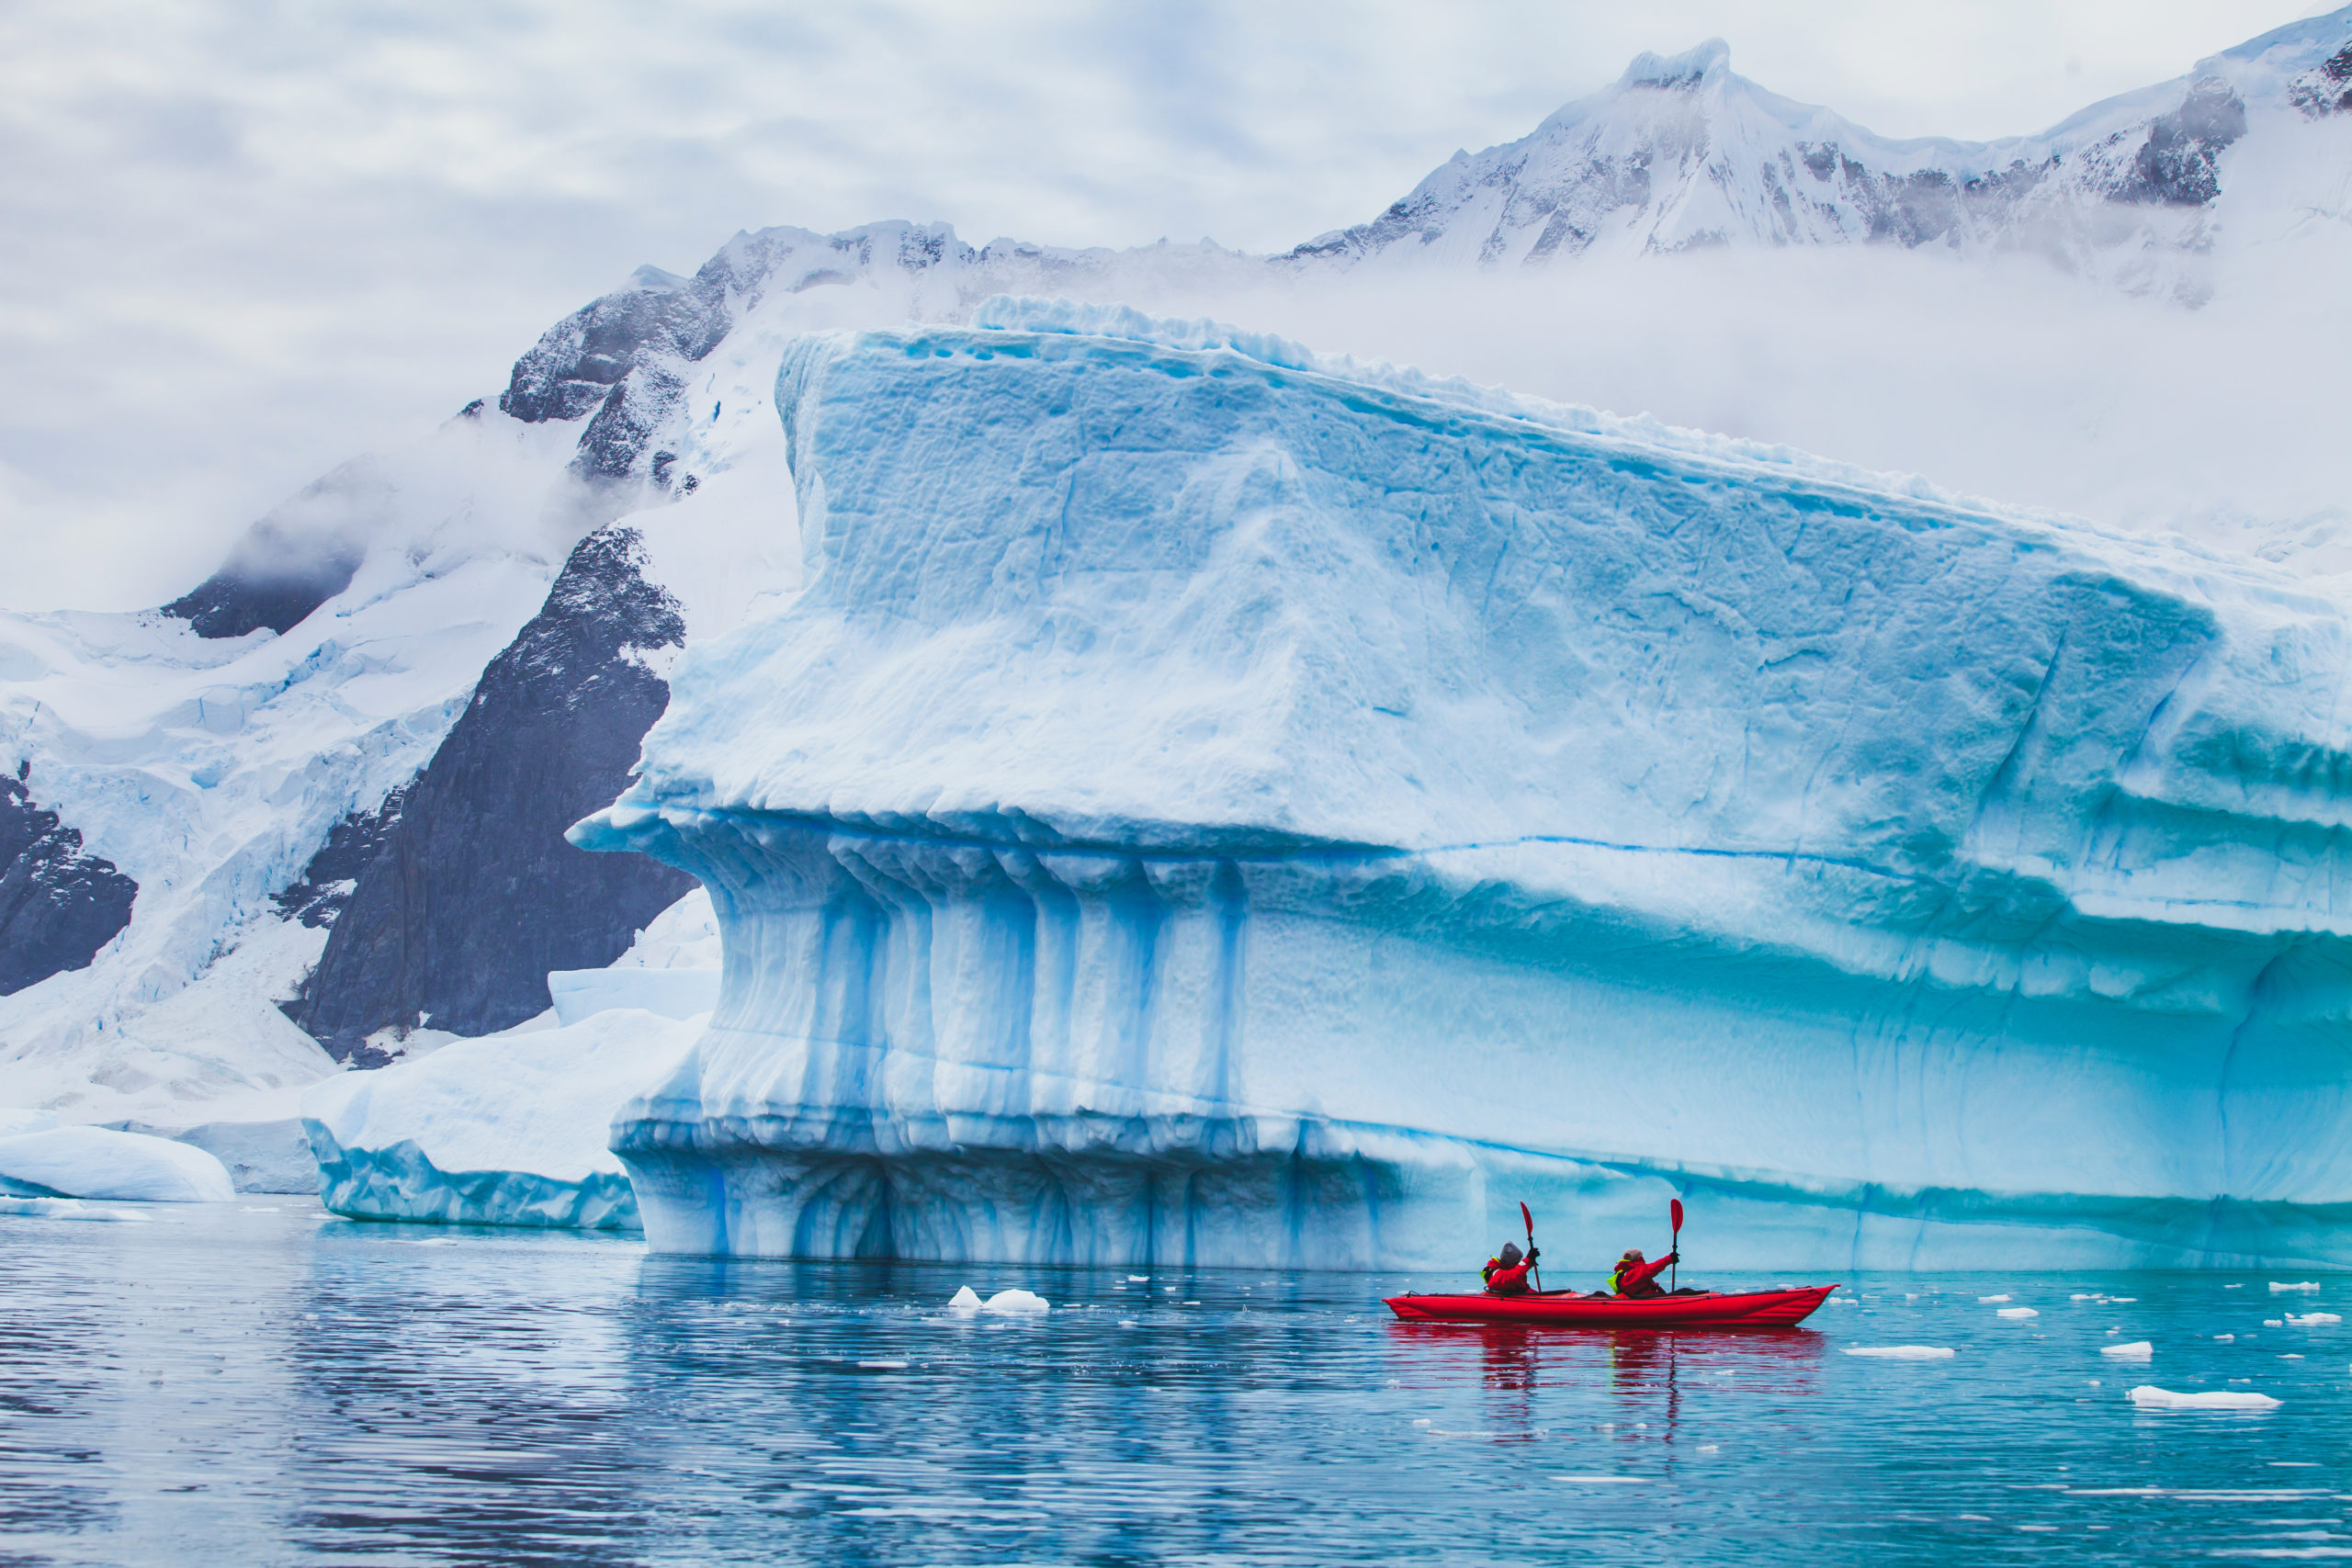 A pair of kayakers navigate past an iceberg near a rocky Antarctic coast